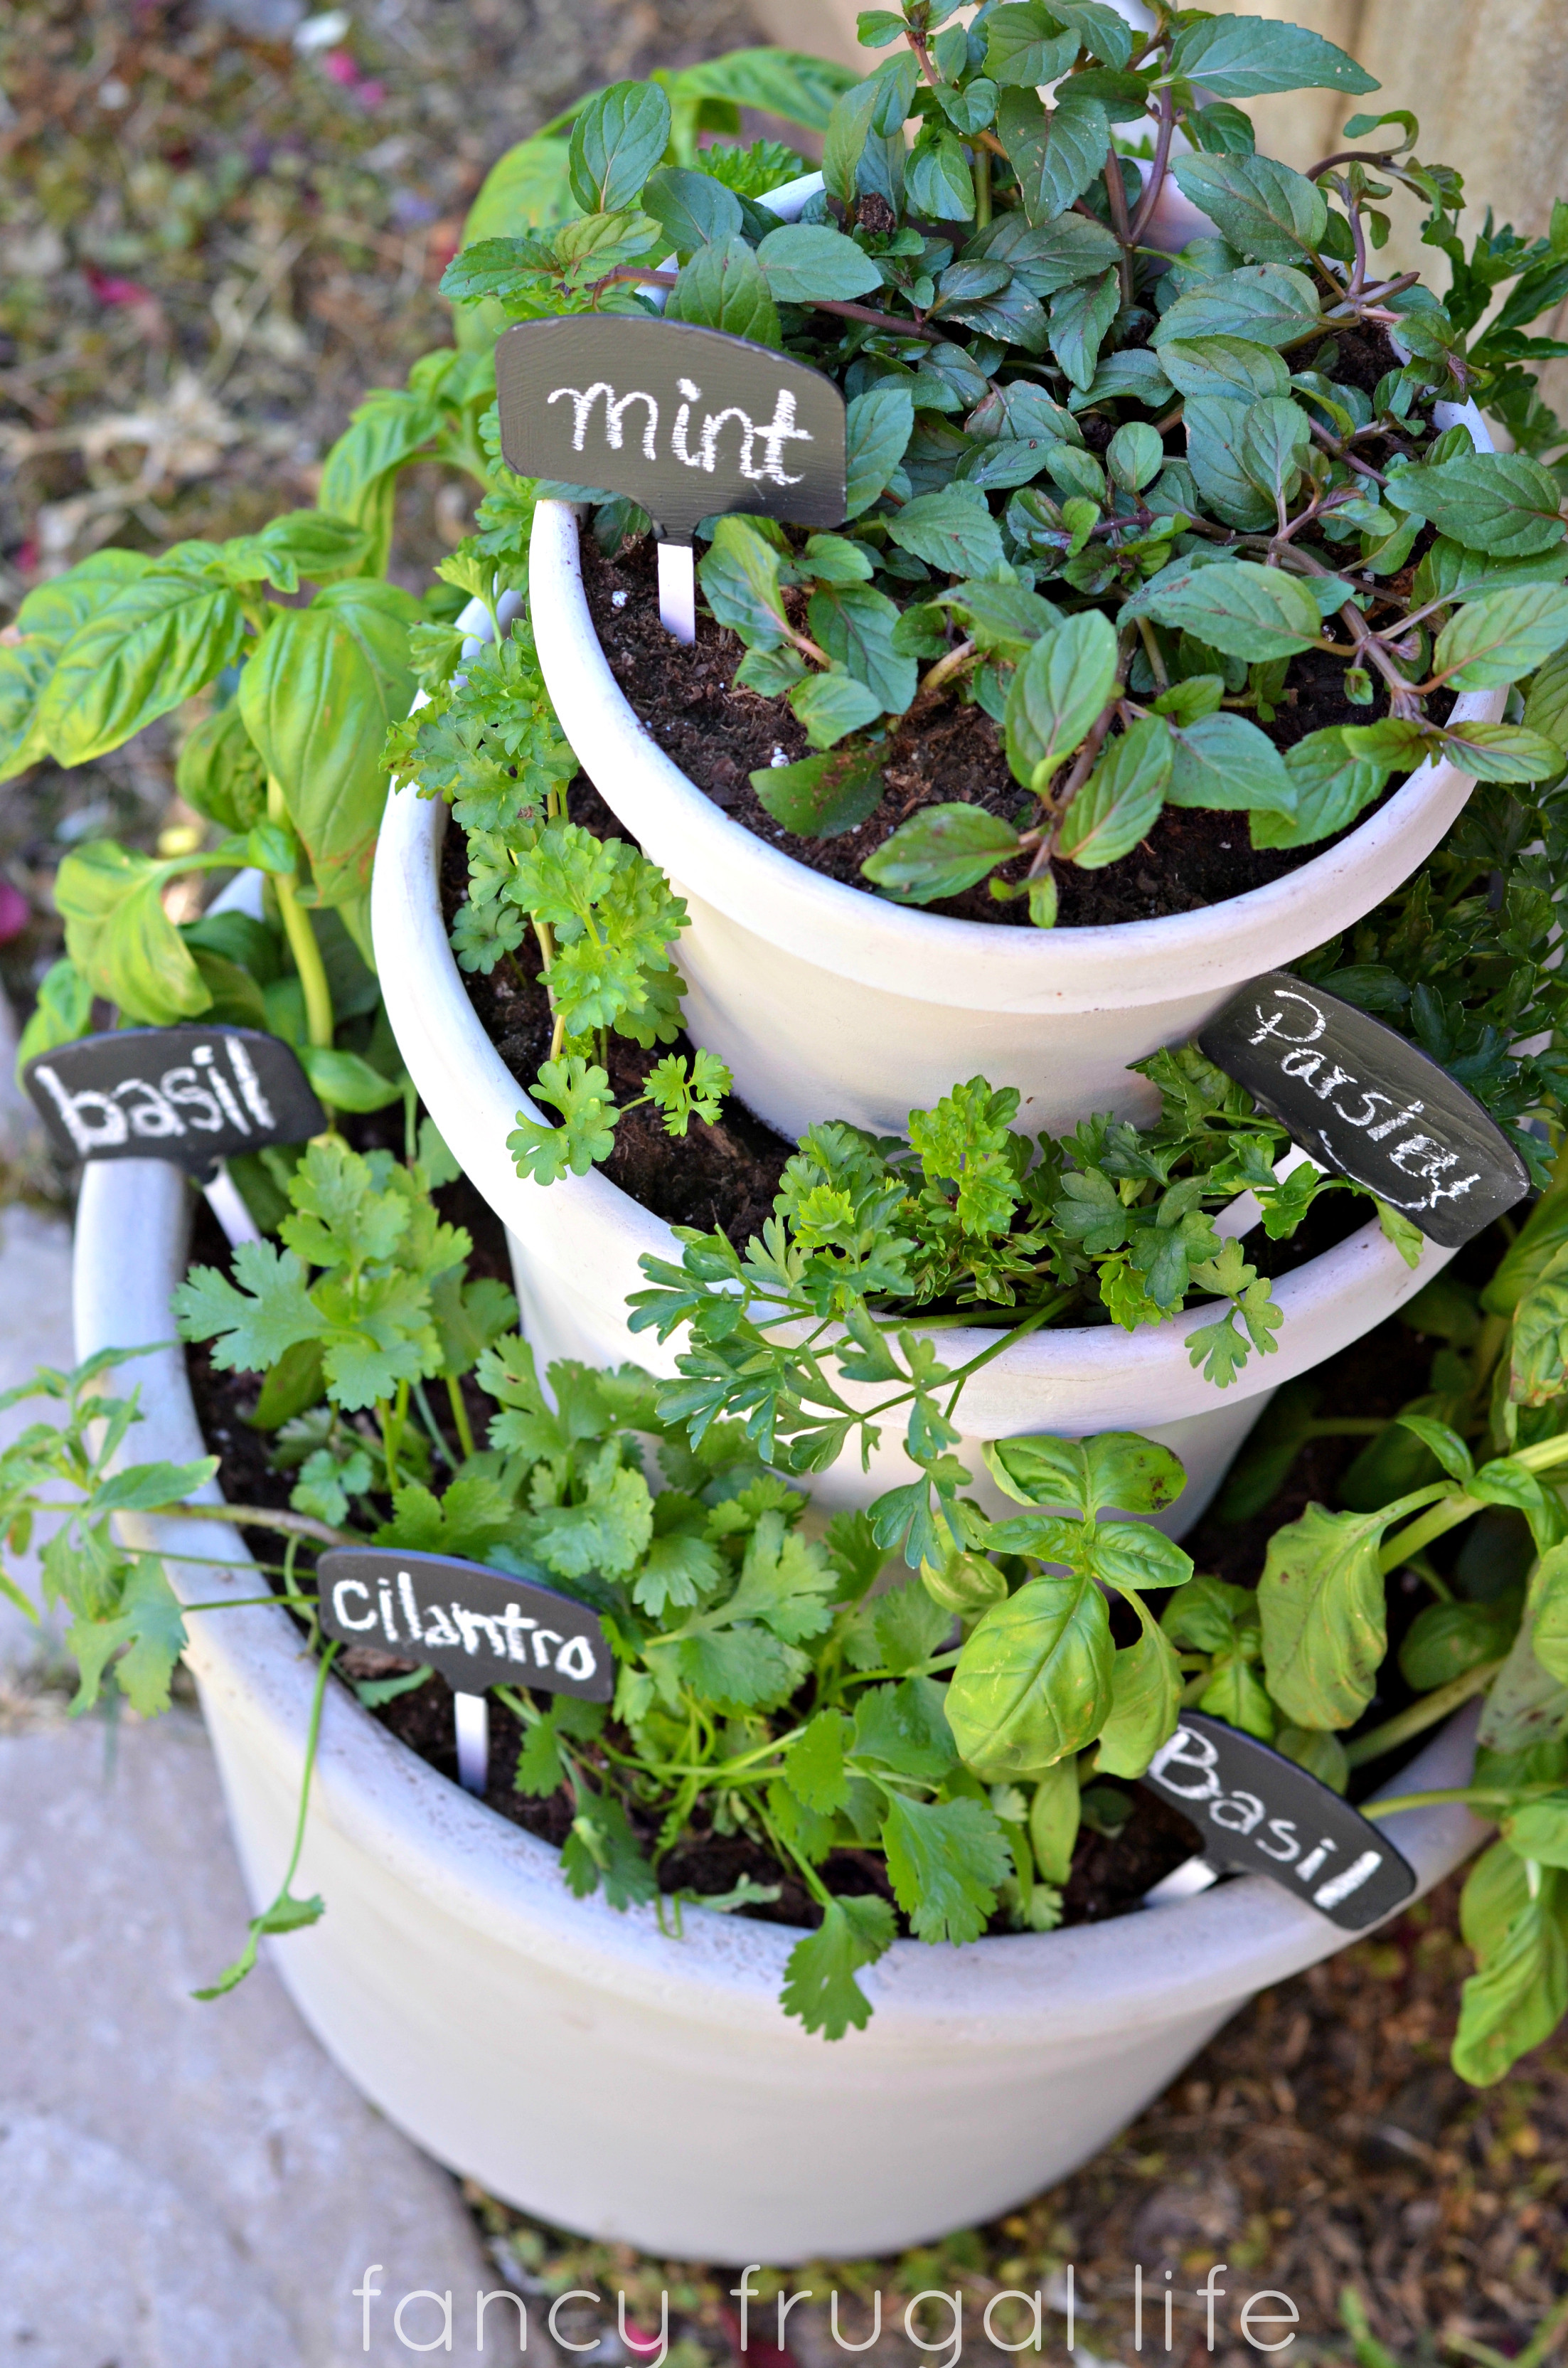 Best ideas about Patio Herb Garden
. Save or Pin DIY Stacked Herb Garden Now.